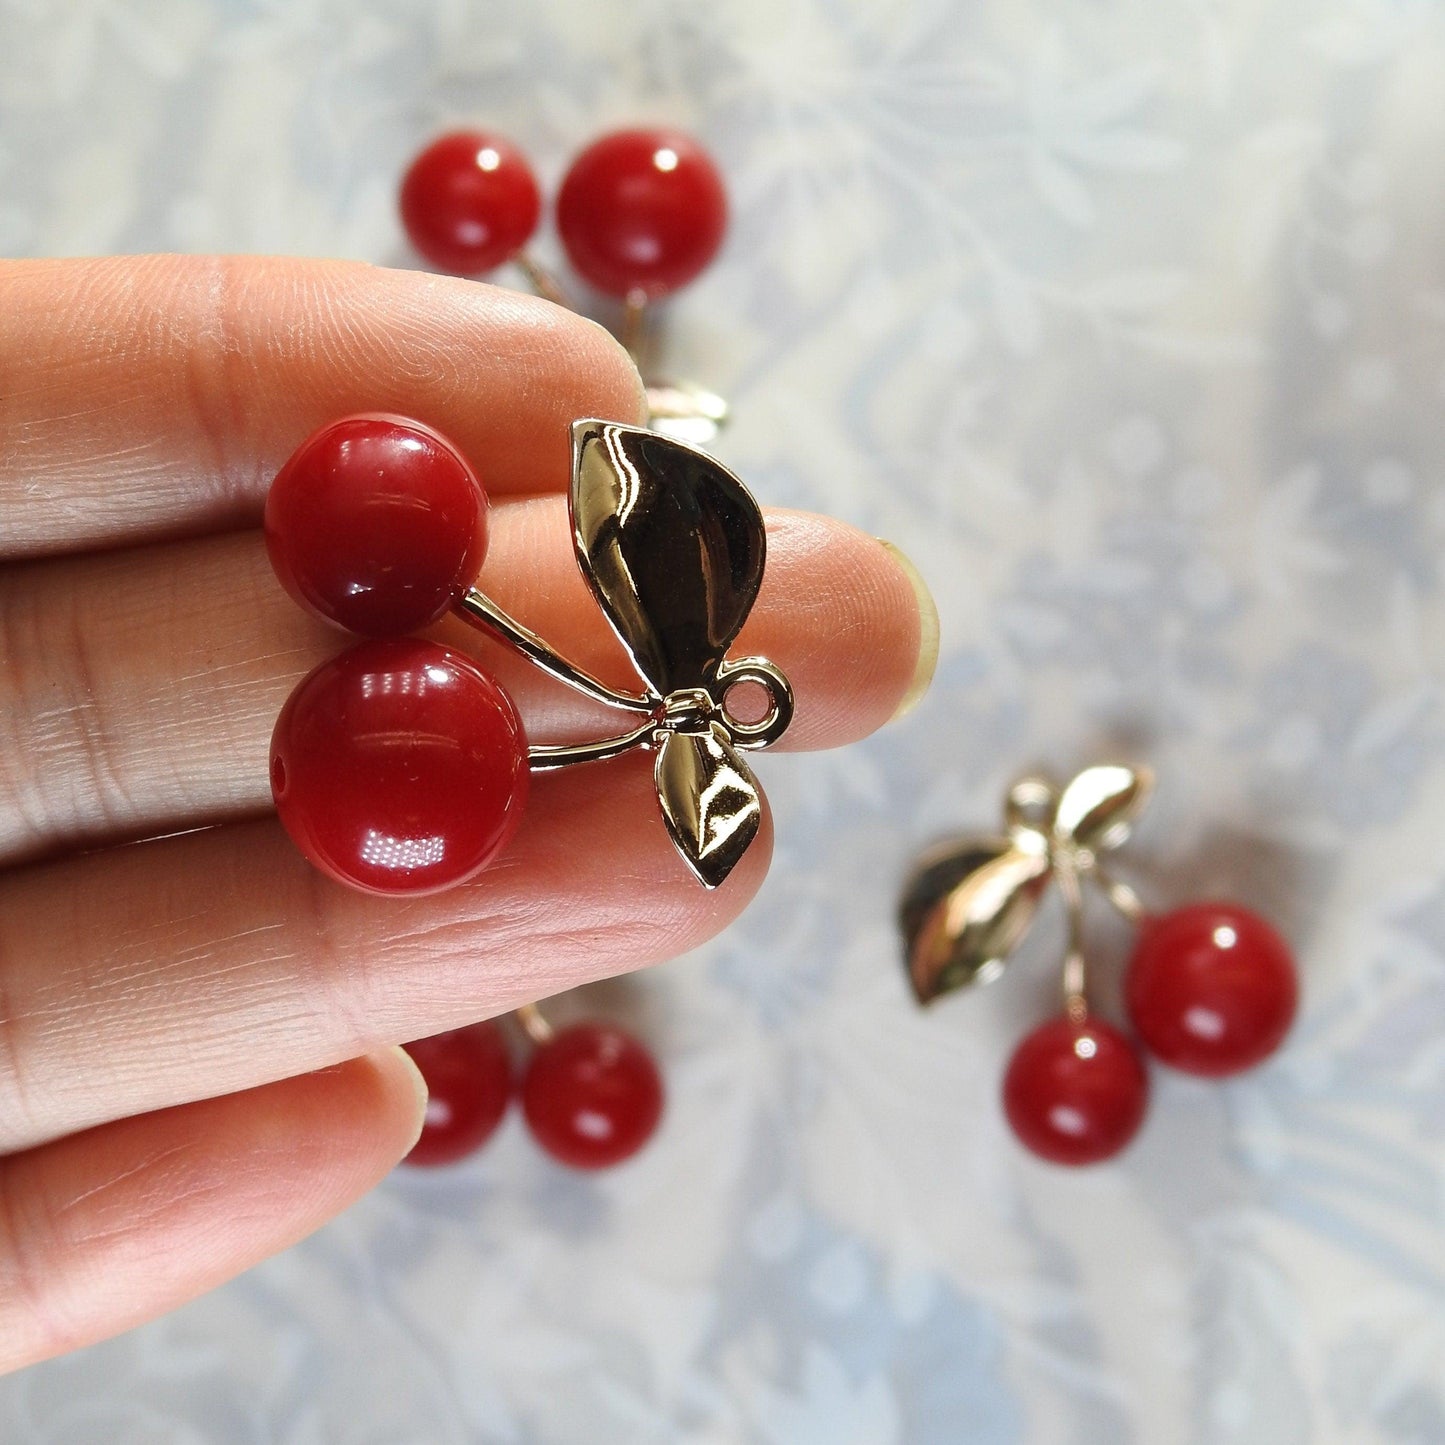 Cherry charms pendants